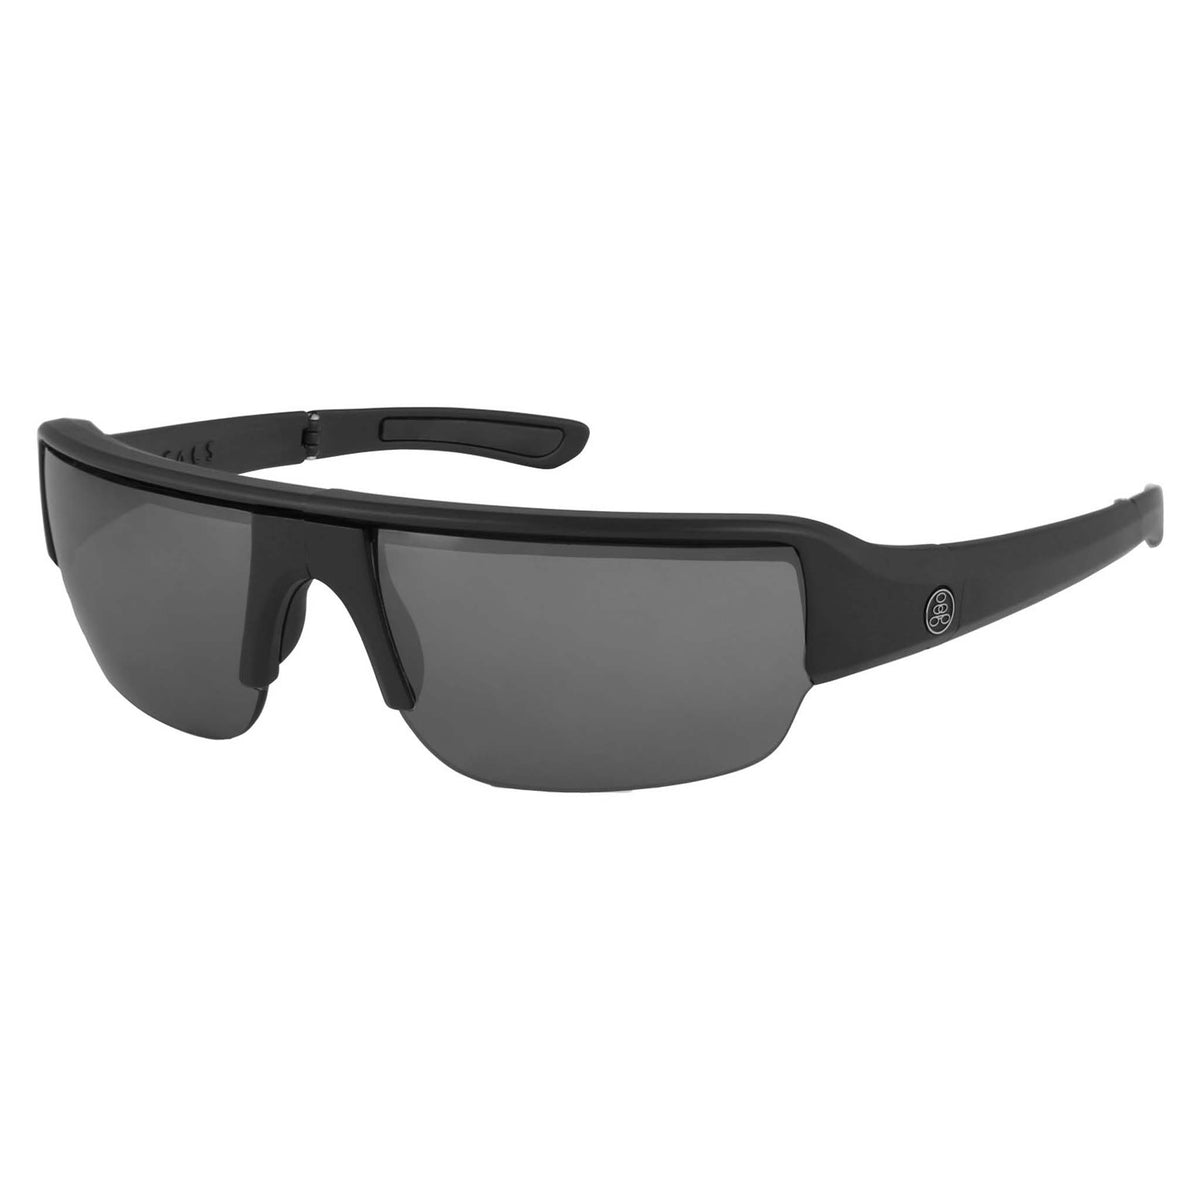 Popticals, Premium Compact Sunglasses, PopGun, 010010-BMLN, Polarized Sunglasses, Matte Black Frame, Gray Lenses w/Silver Mirror Finish, Glam View